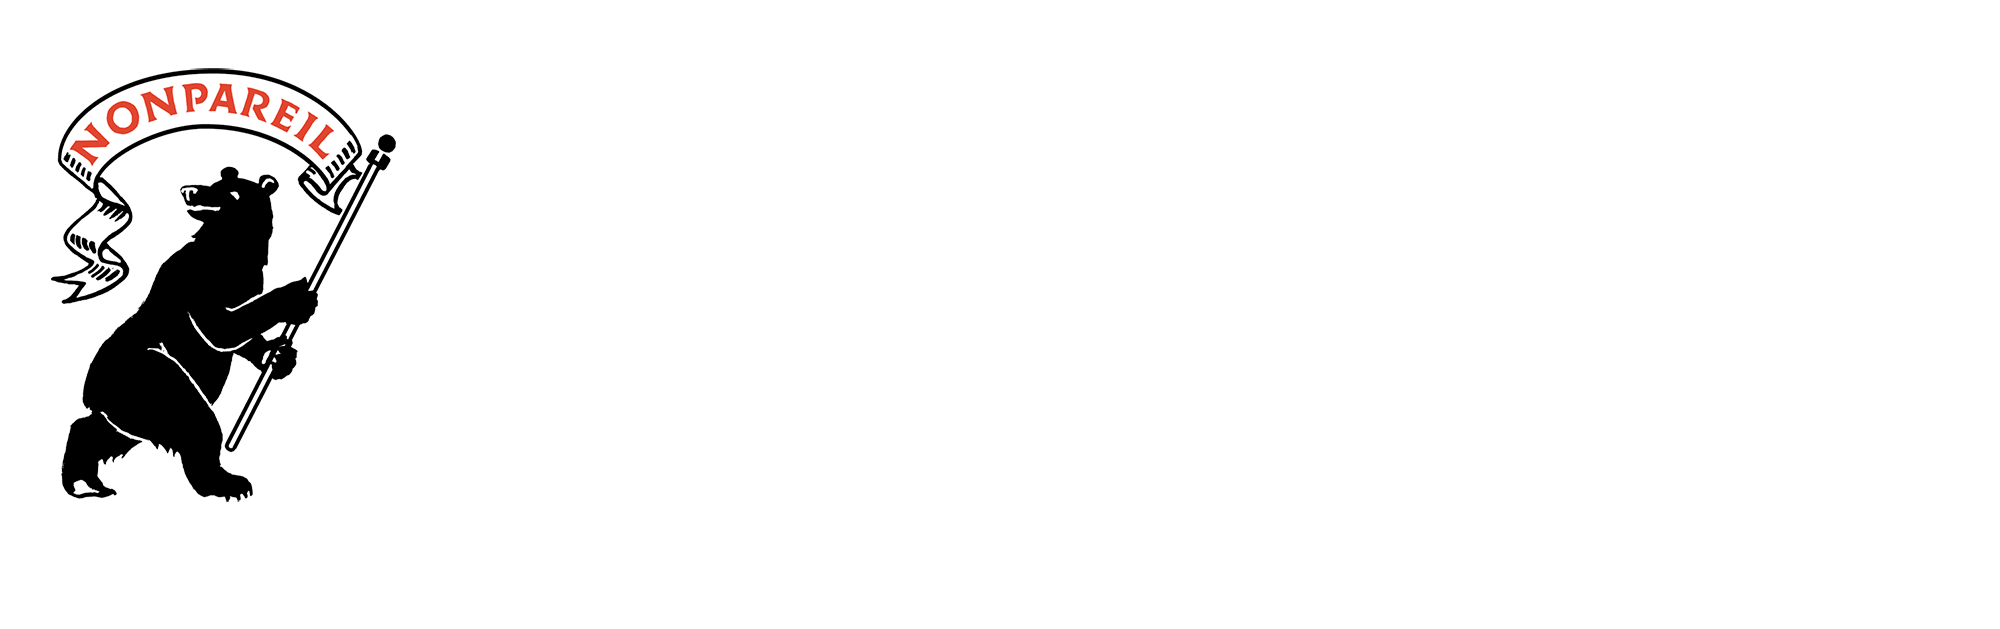 Am I your type? I’m Epigrammata.